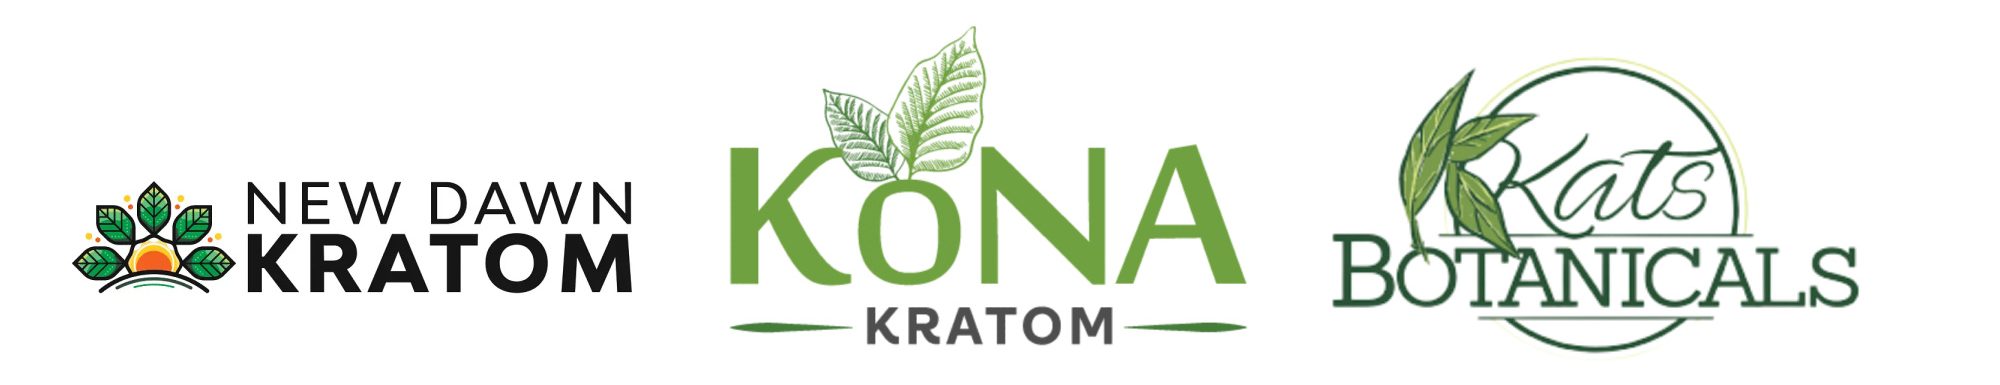 image of online stores worth visiting for kratom